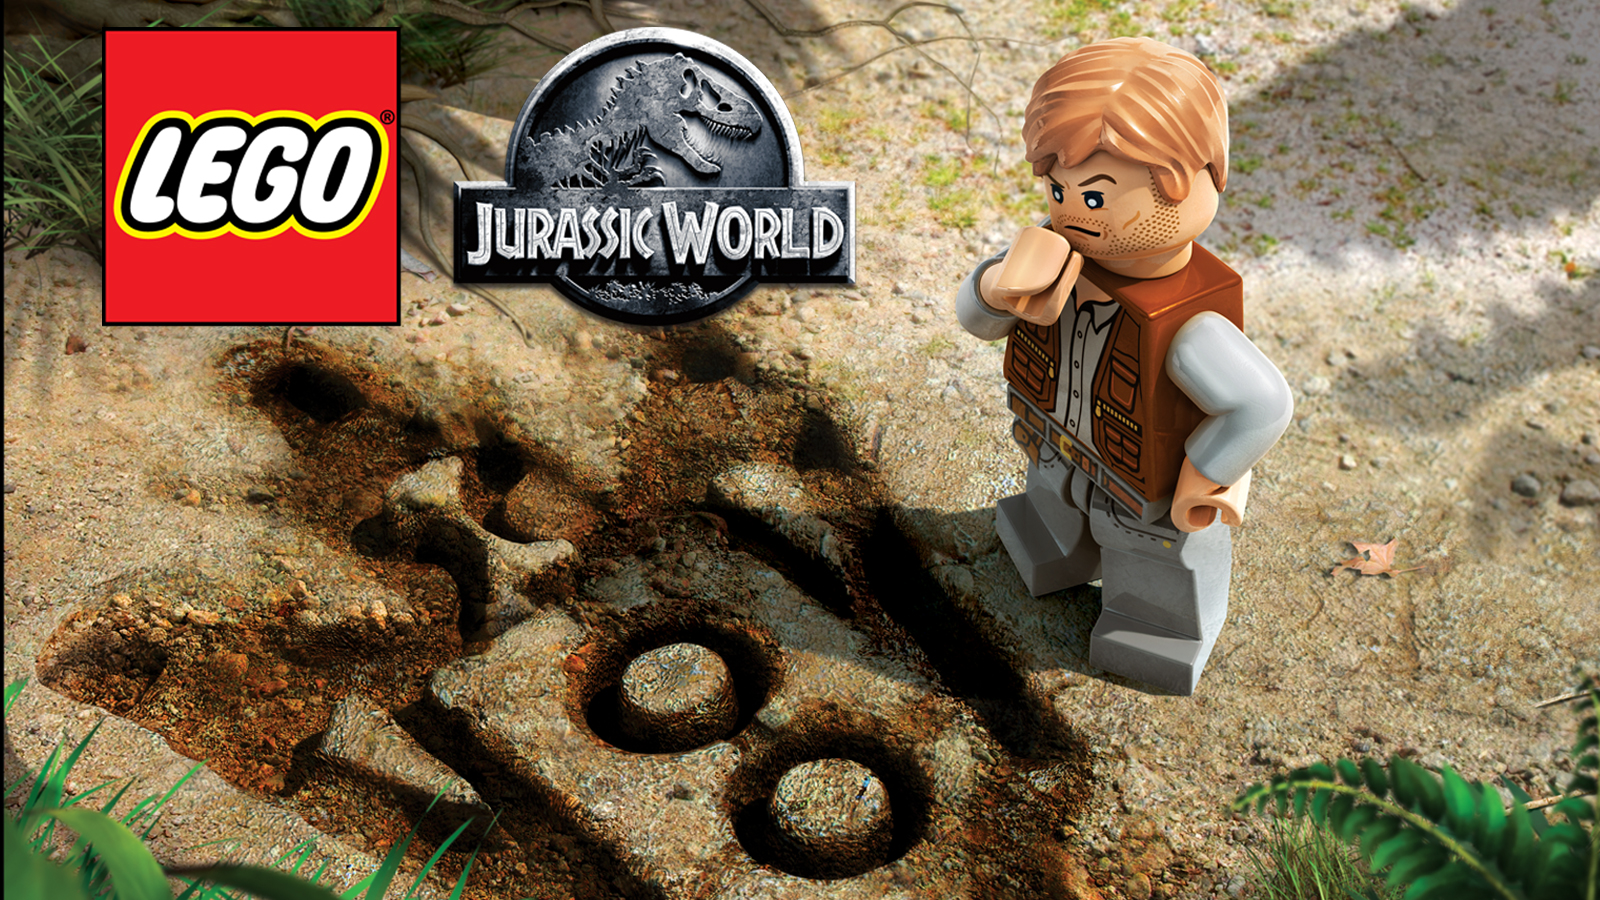 Lego xbox 360 jurassic world